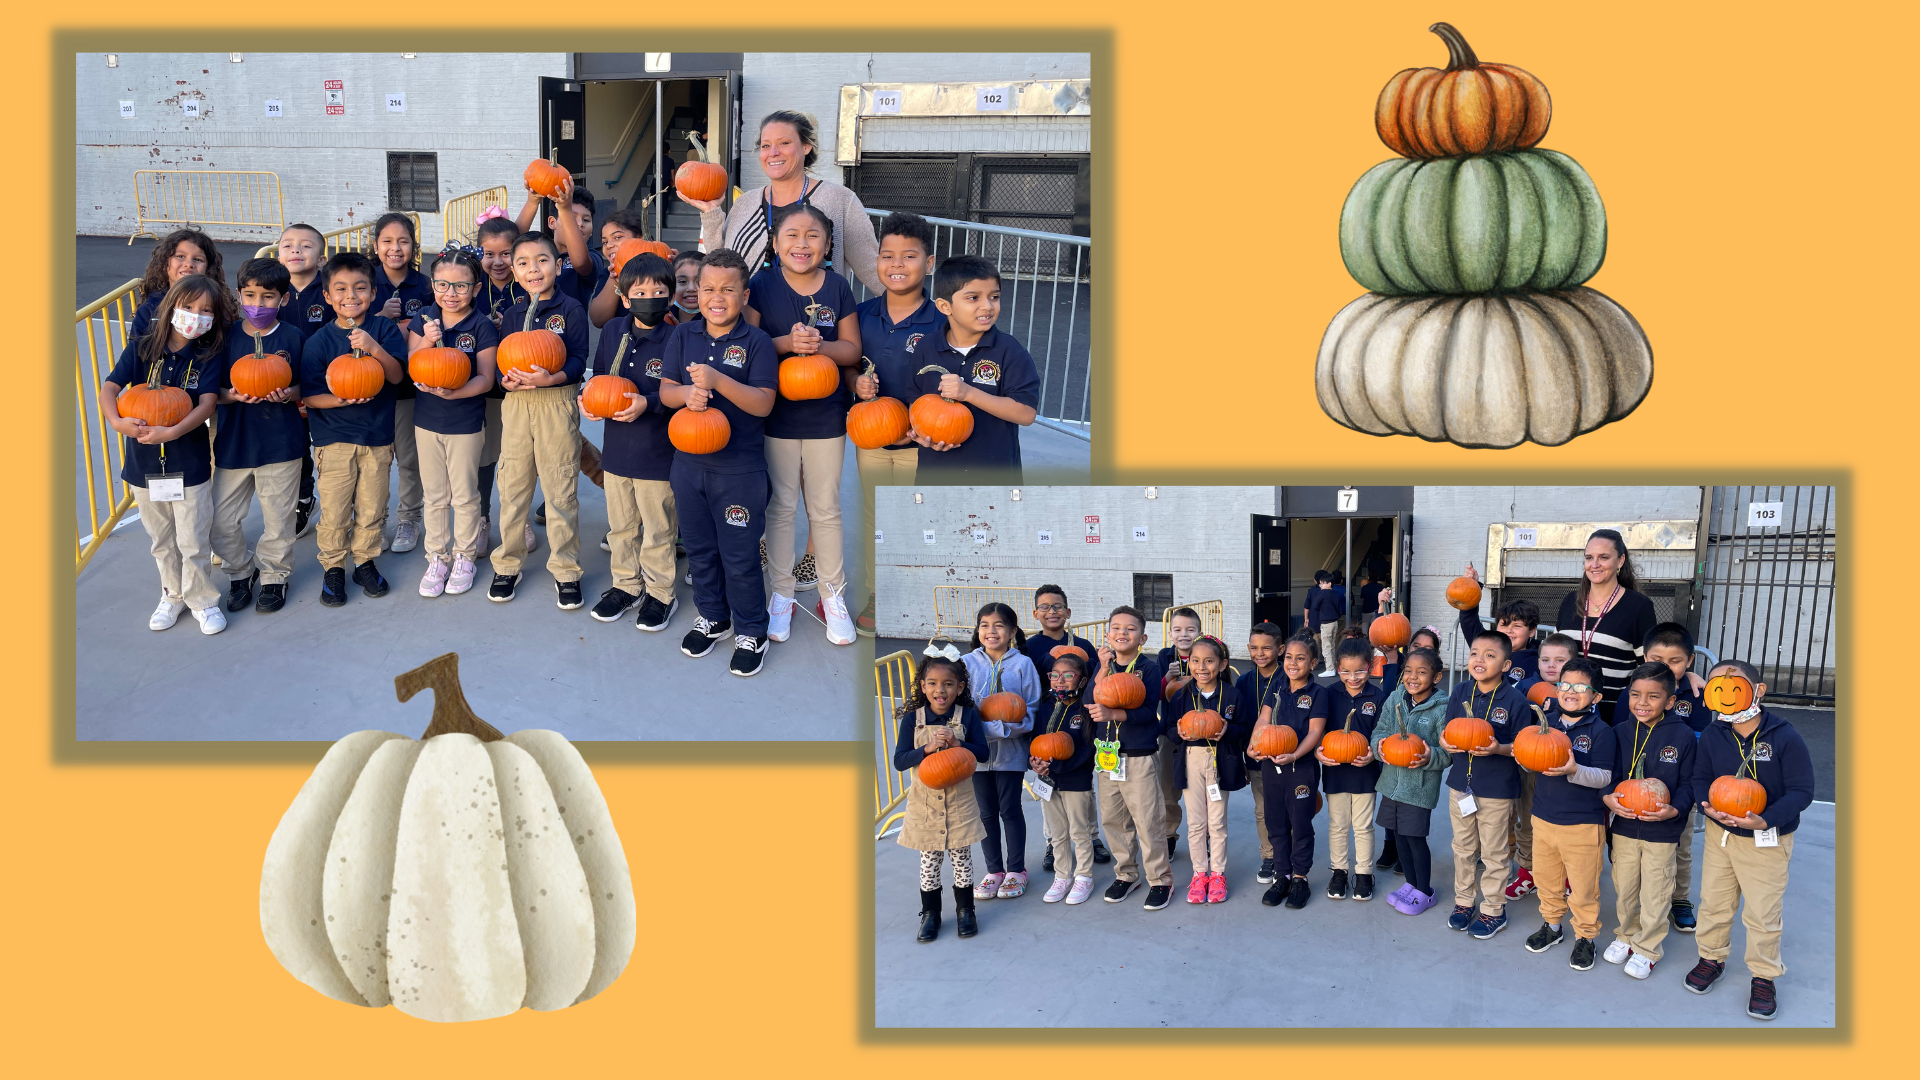 Students enjoying their pumpkins